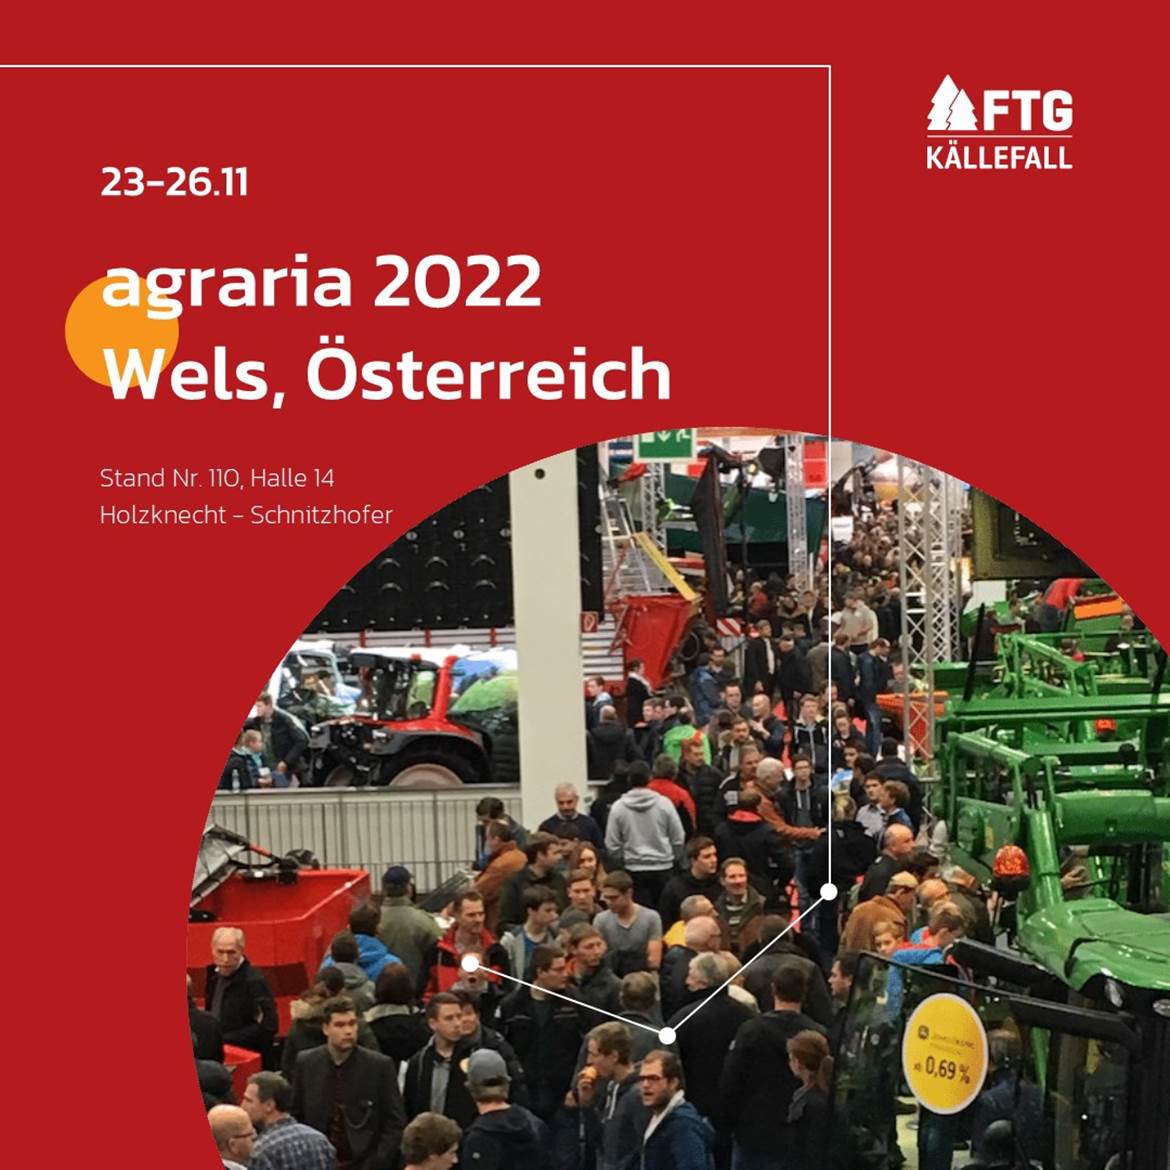 FTG Källefall Holzknecht Schnitzhofer Agraria Messe 2022.jpg